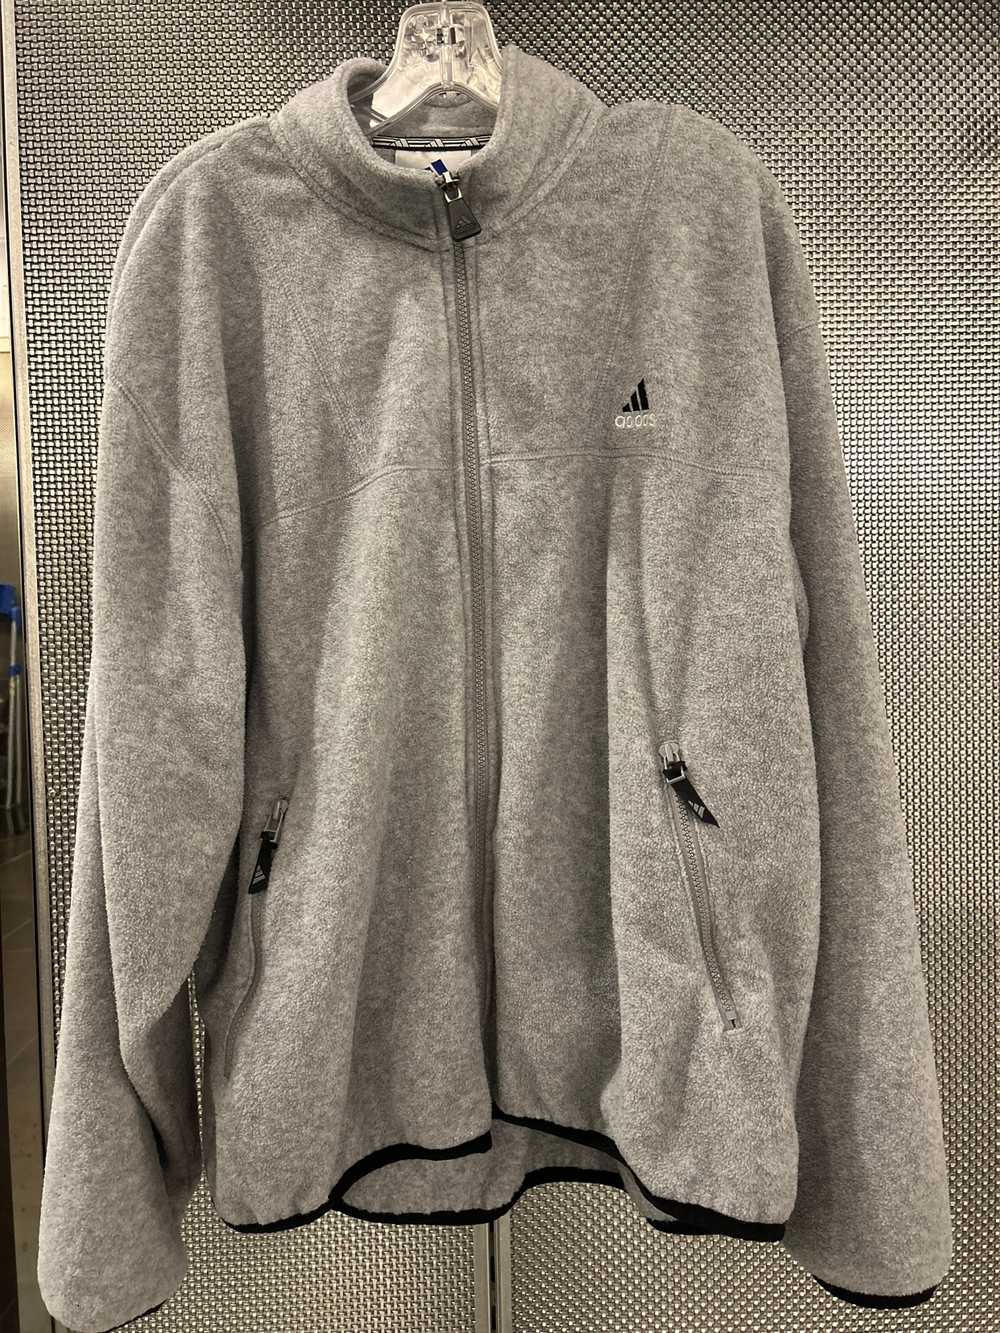 Adidas 90's Grey Adidas Fleece - image 1